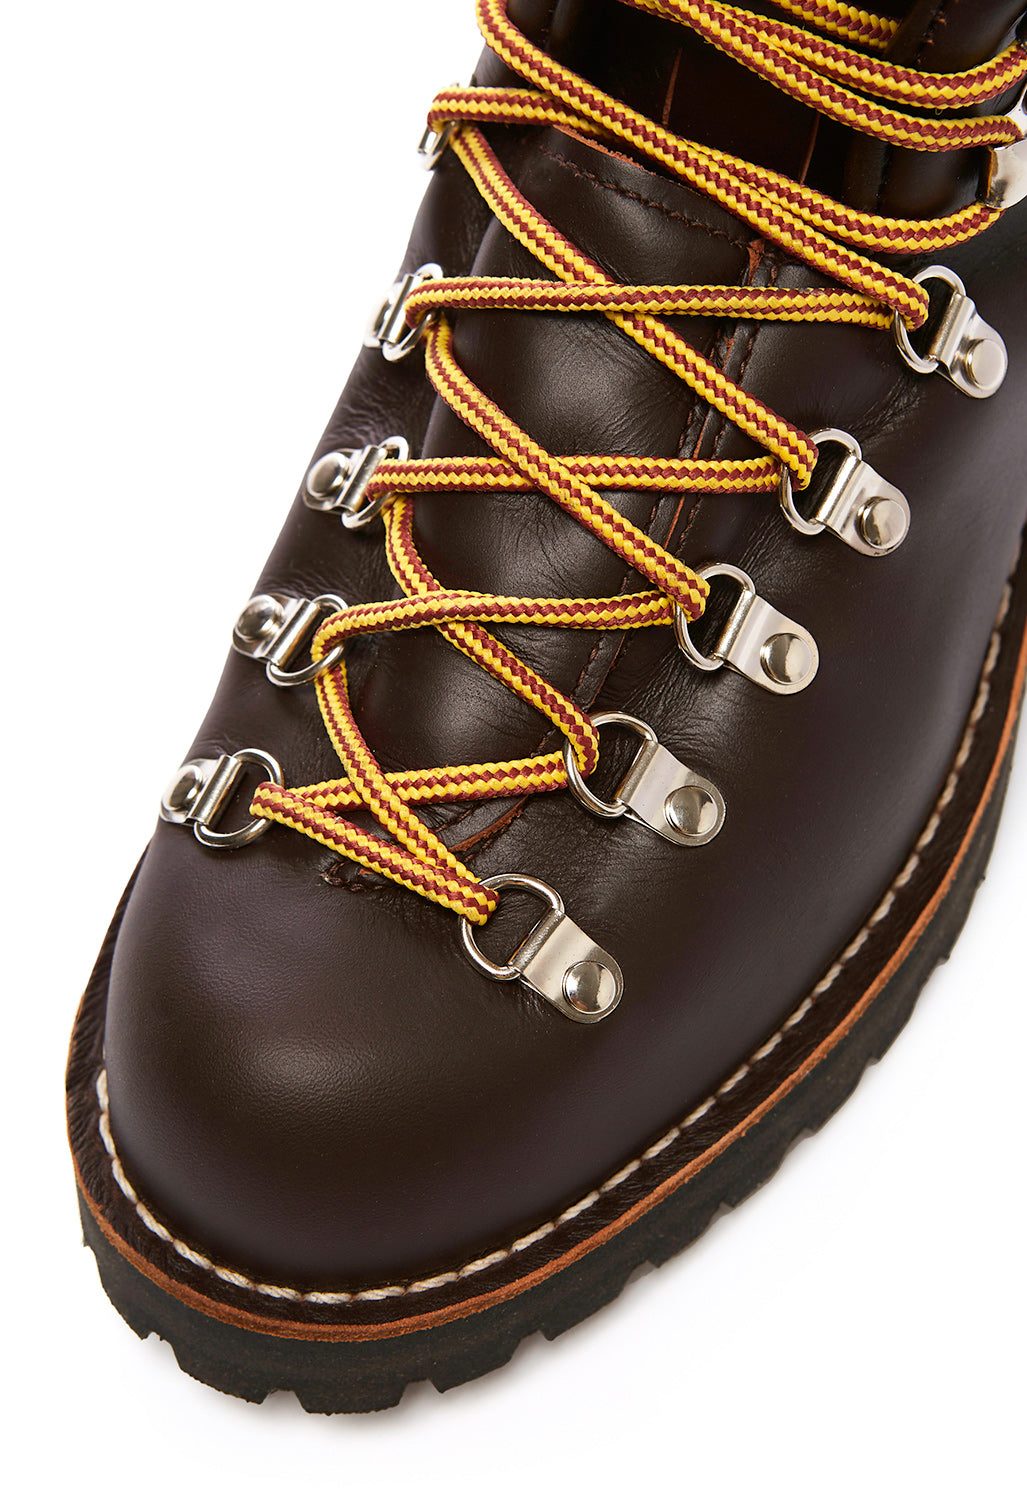 Danner Mountain Light Men's Boots - Brown